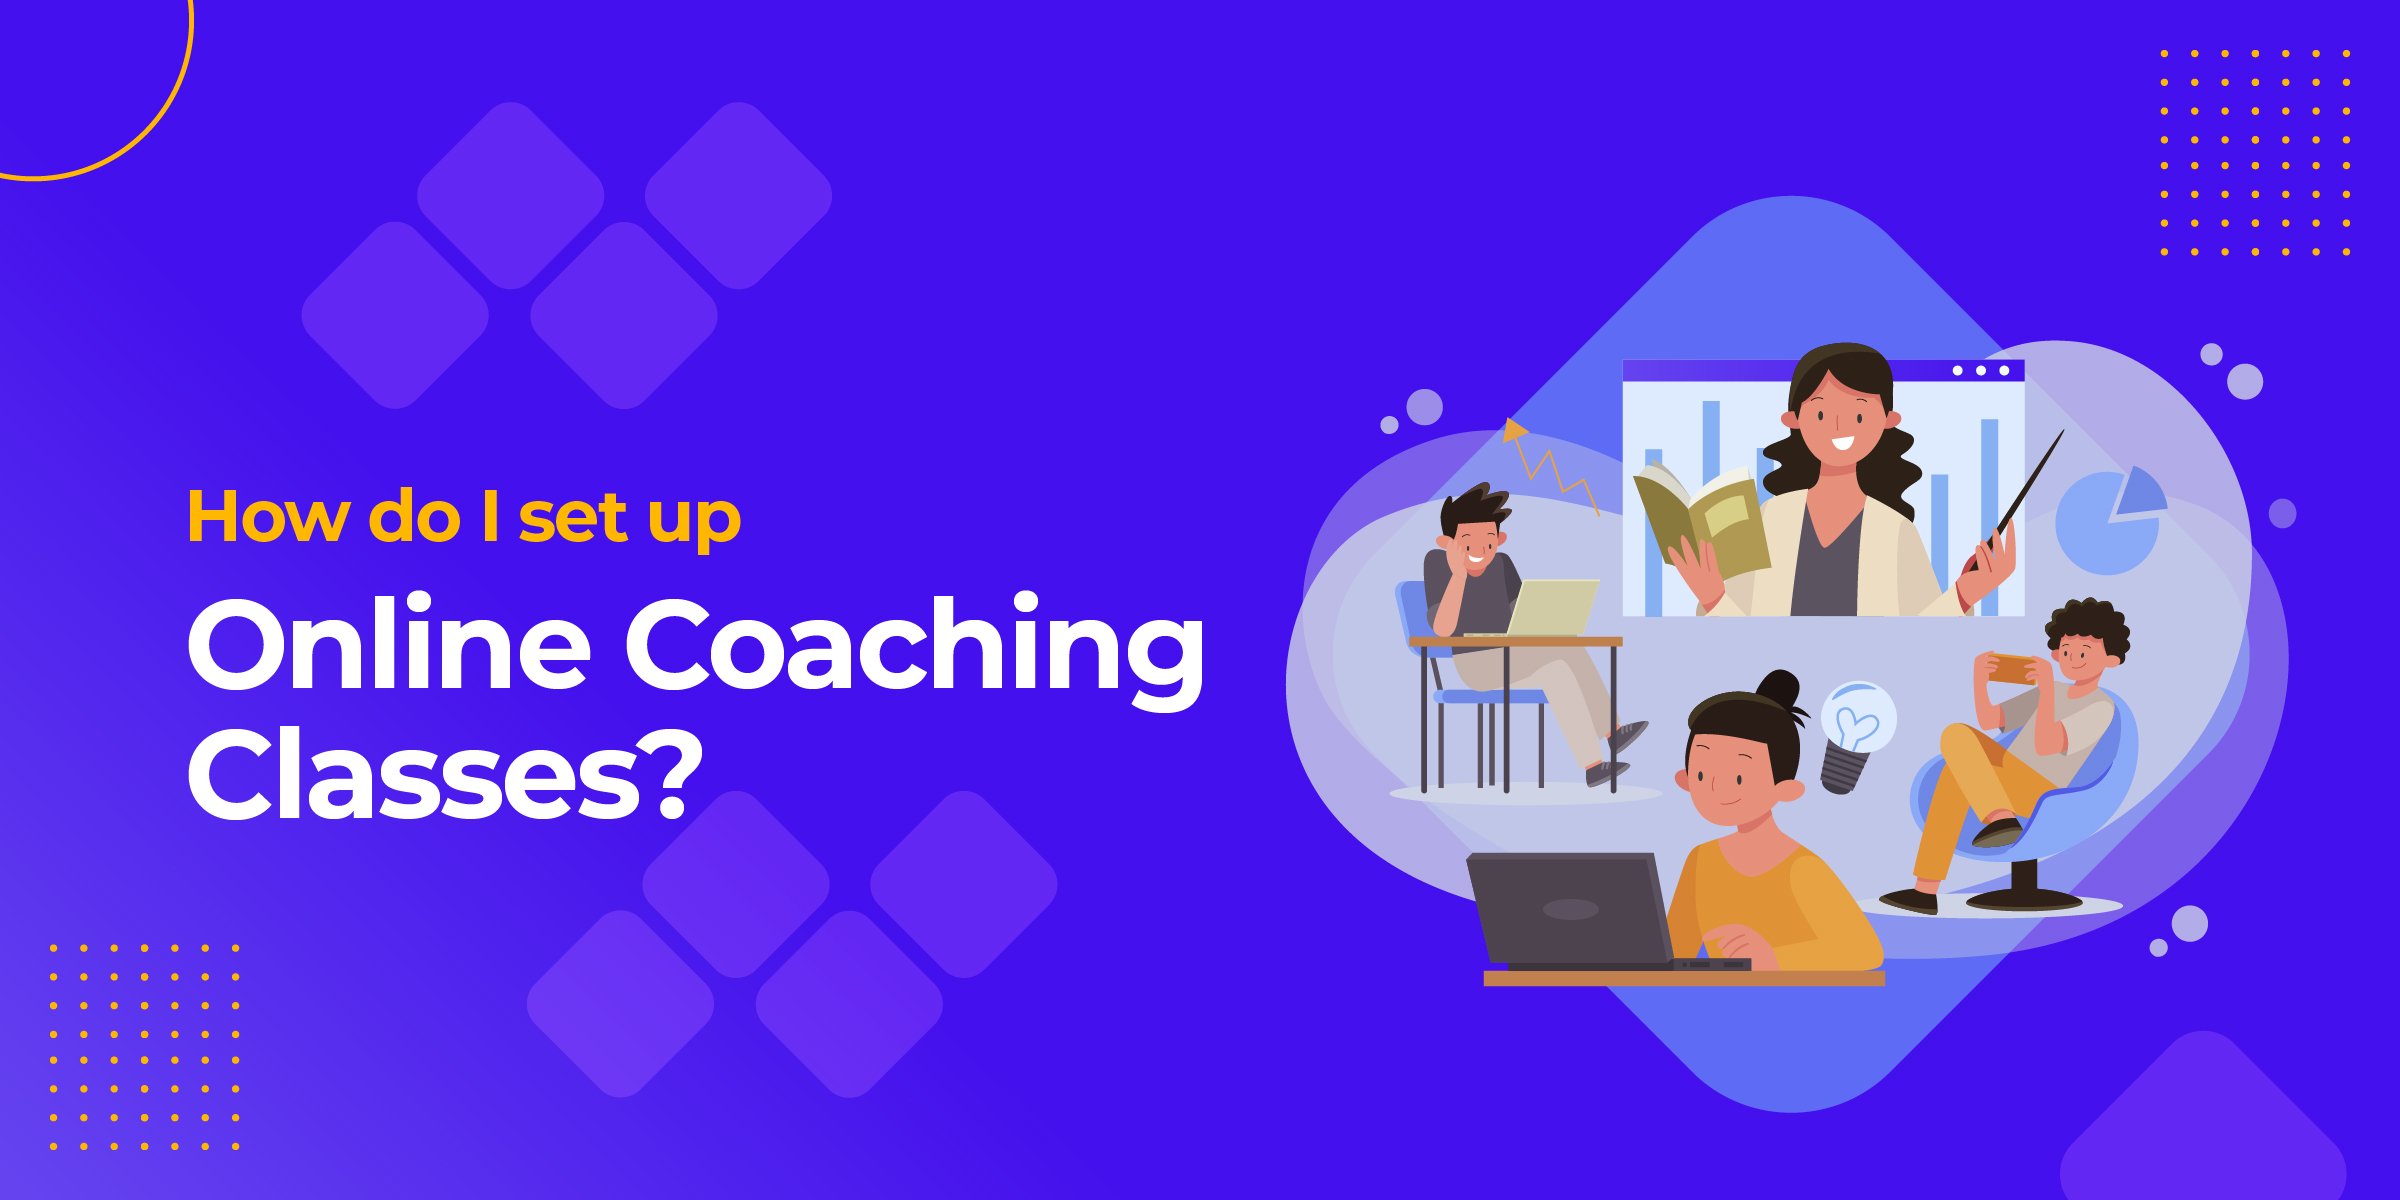 How Do I Set Up Online Coaching Classes?